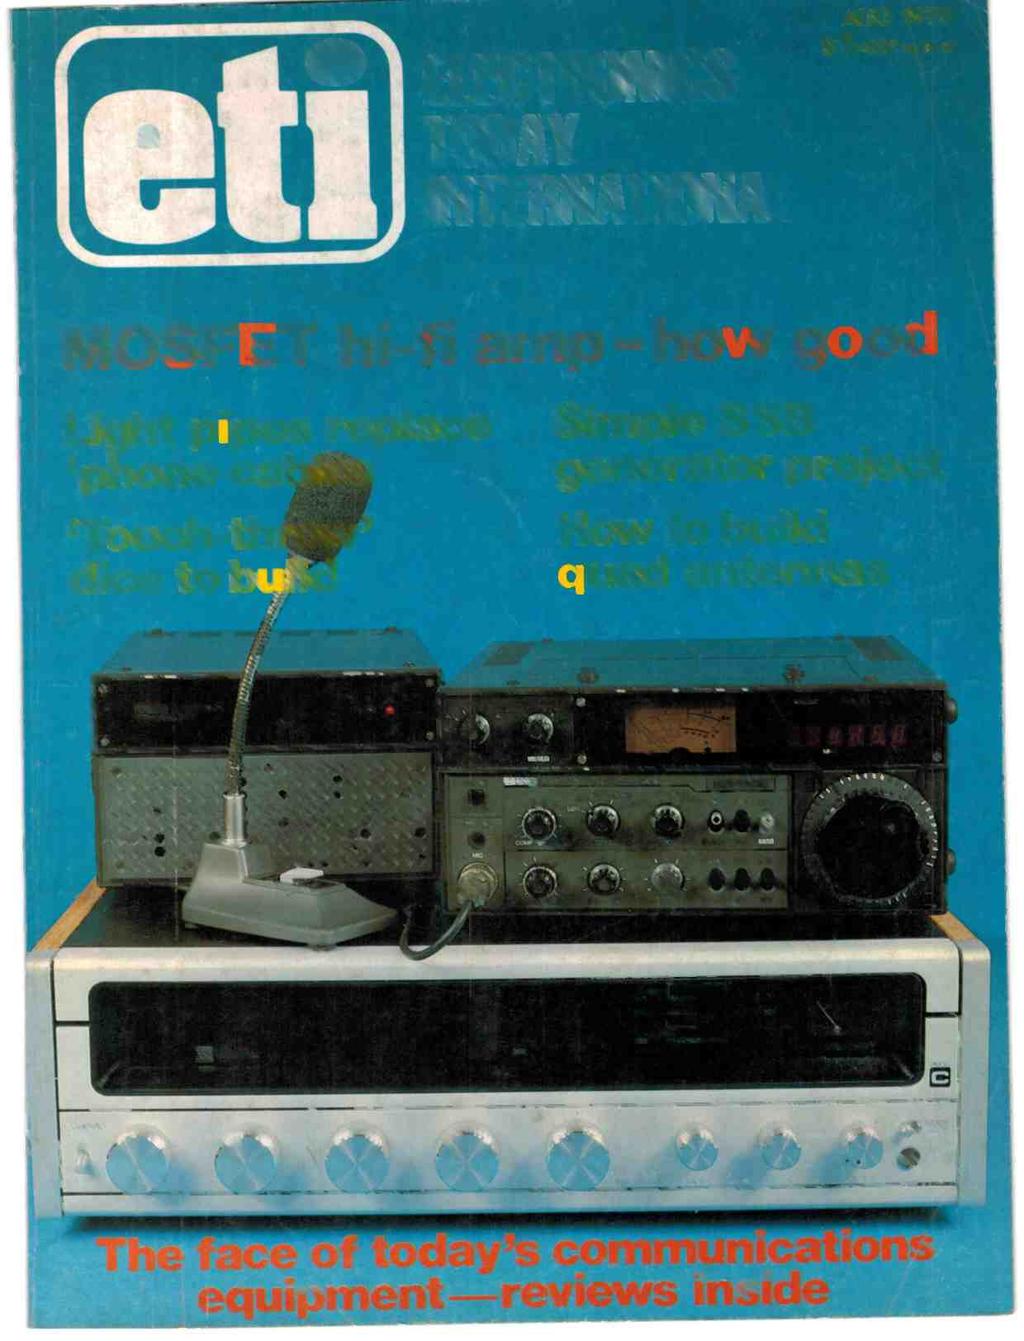 ., rflrl ELECTRONICS TODAY INTERNATIONAL AUG 1979 $1'410* NZ $1.